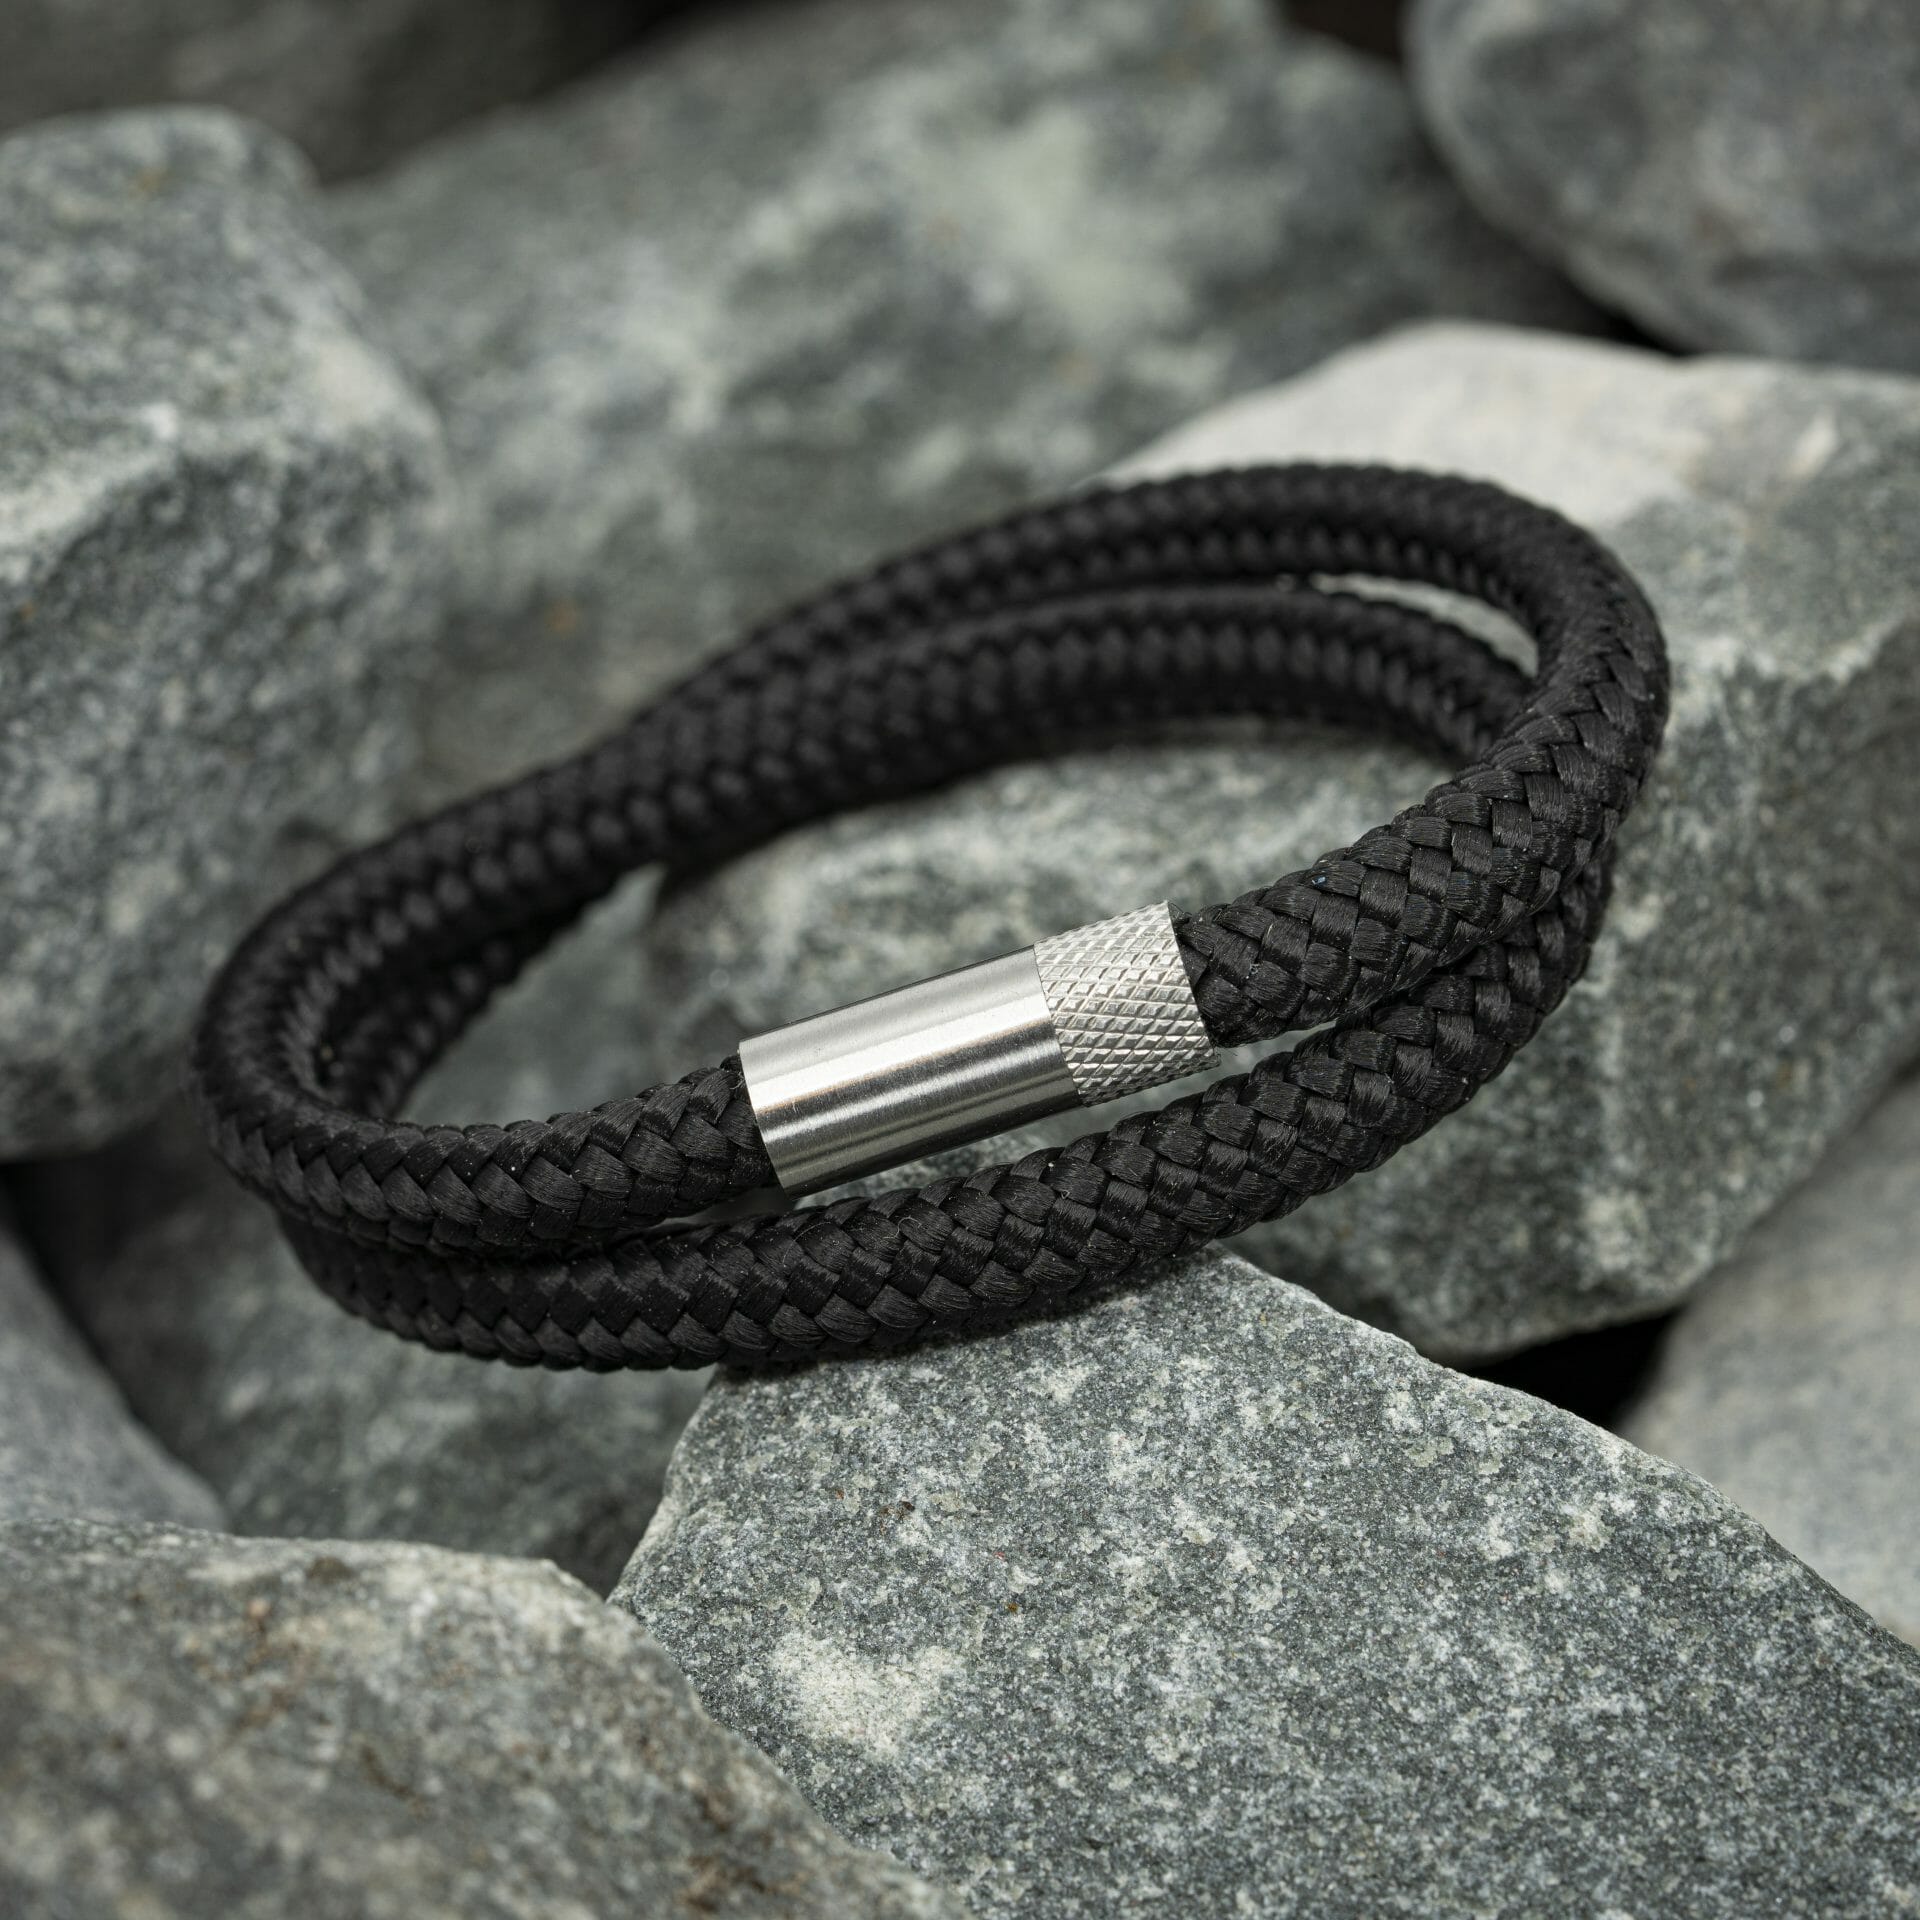 Elite bracelet - Black rope